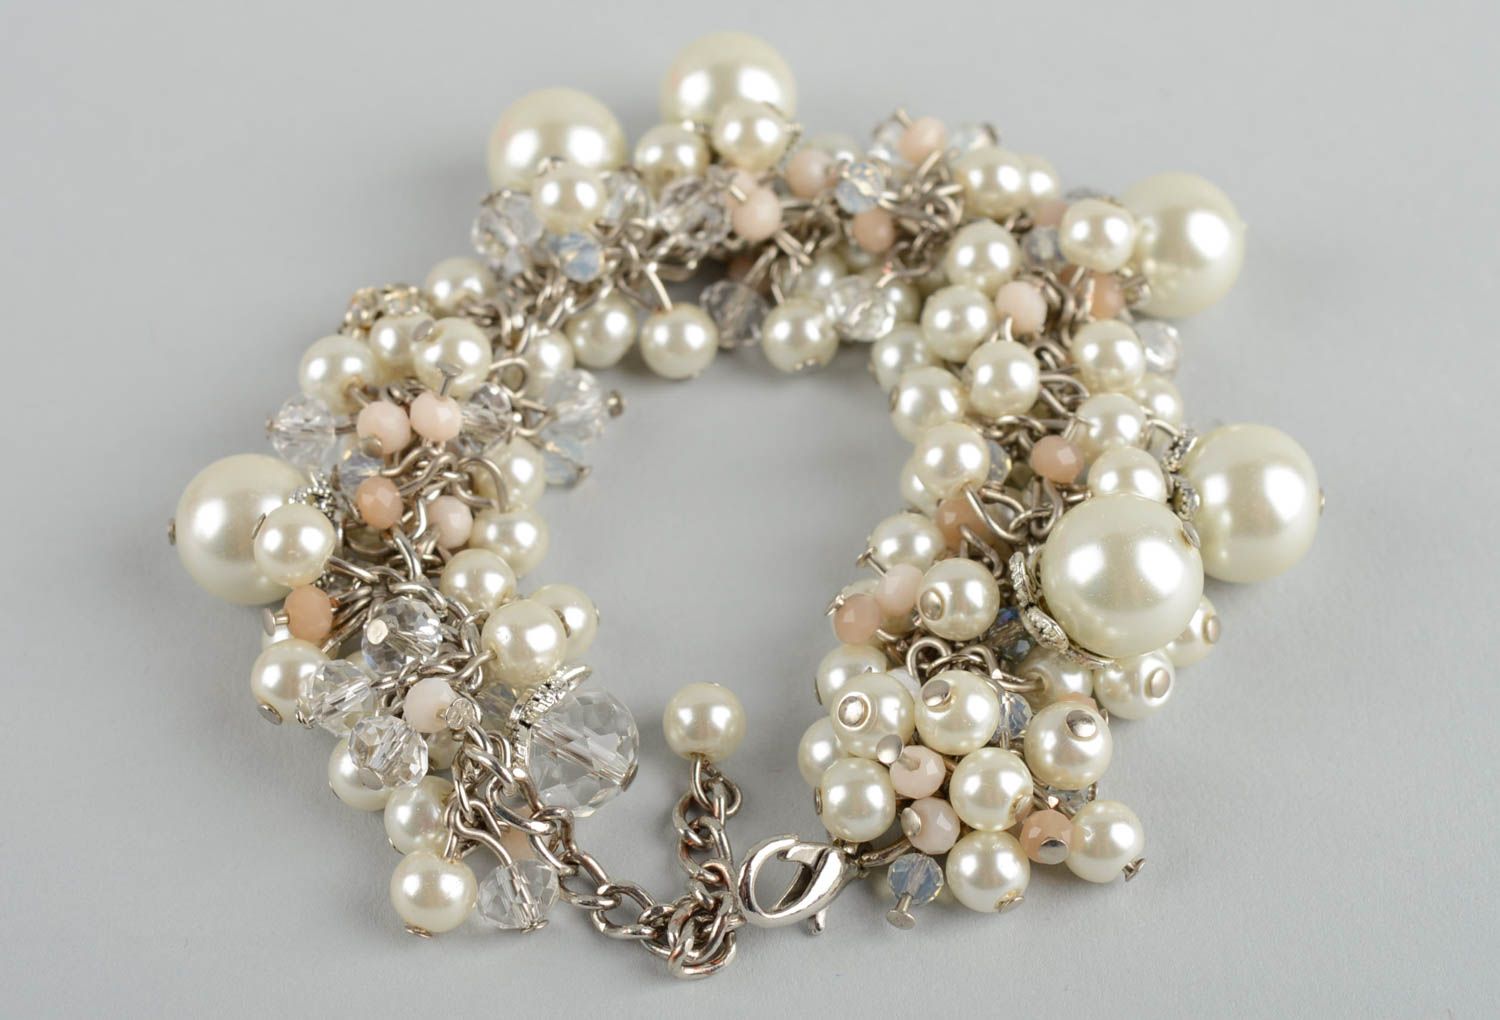 Pearl bracelet handmade jewellery charm bracelet fashion jewelry gifts for her photo 3